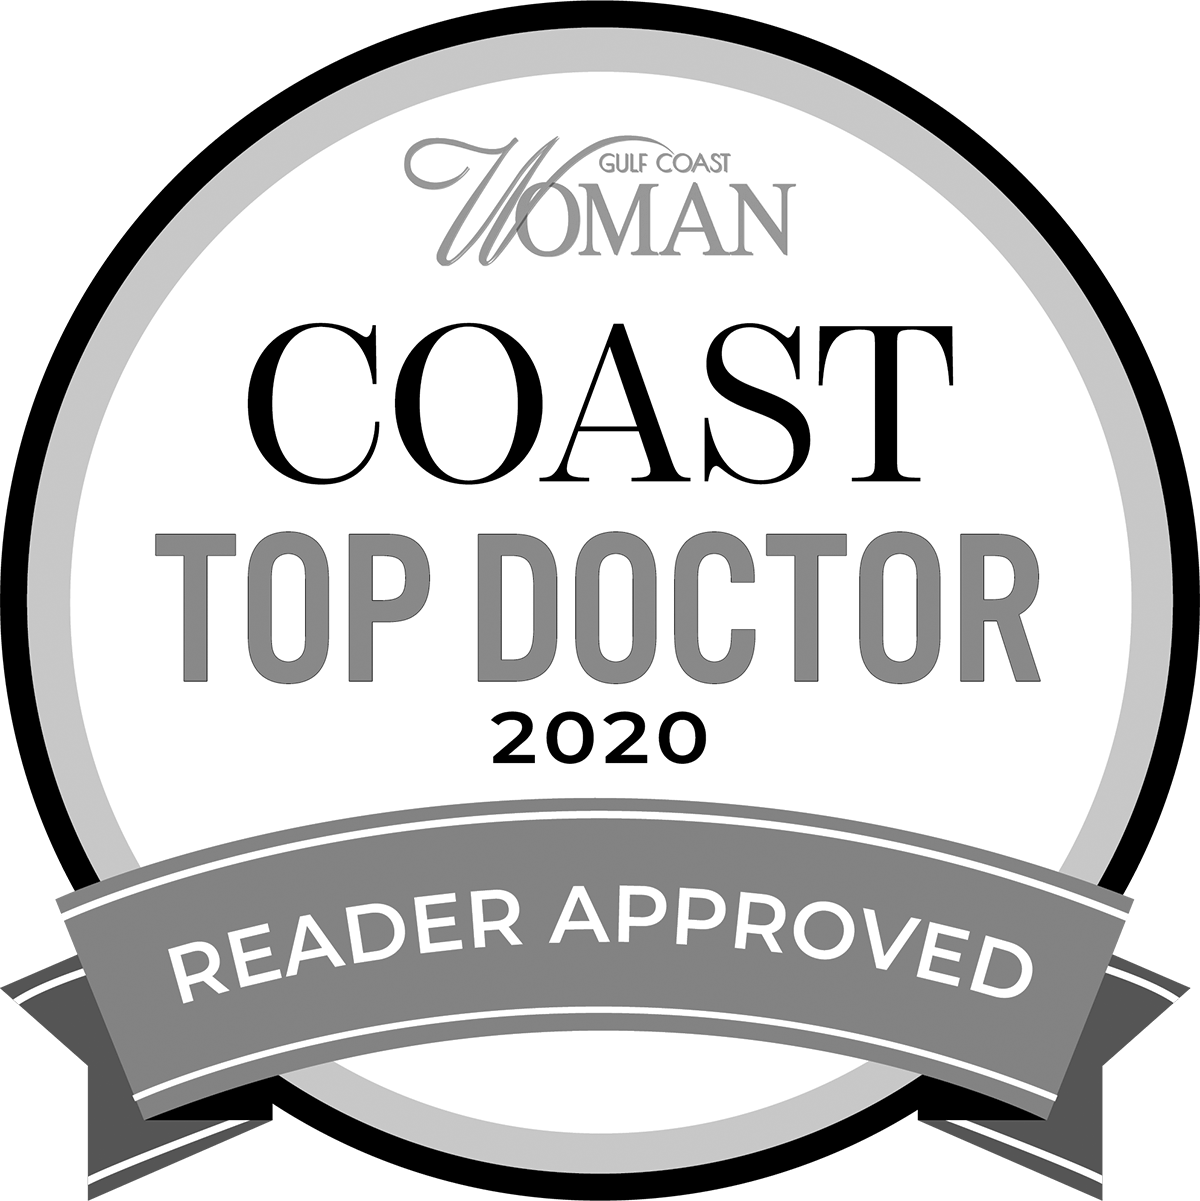 Gulf Coast Woman Top Doctor 2020